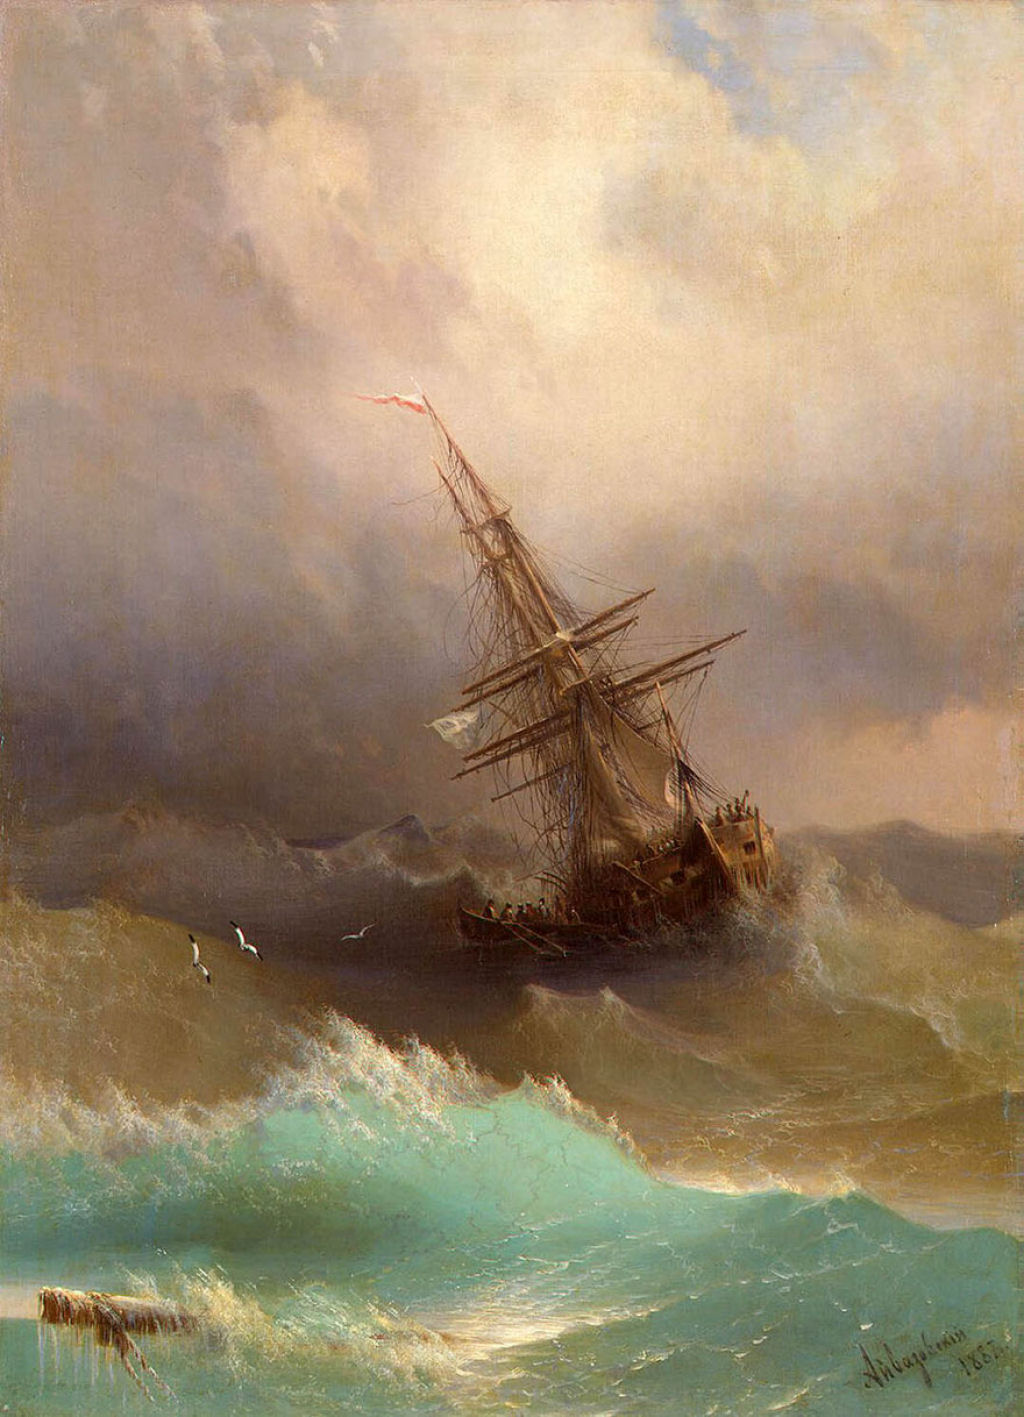 O poder do mar nas hipnticas ondas translcidas de pinturas russas do sculo XIX 07